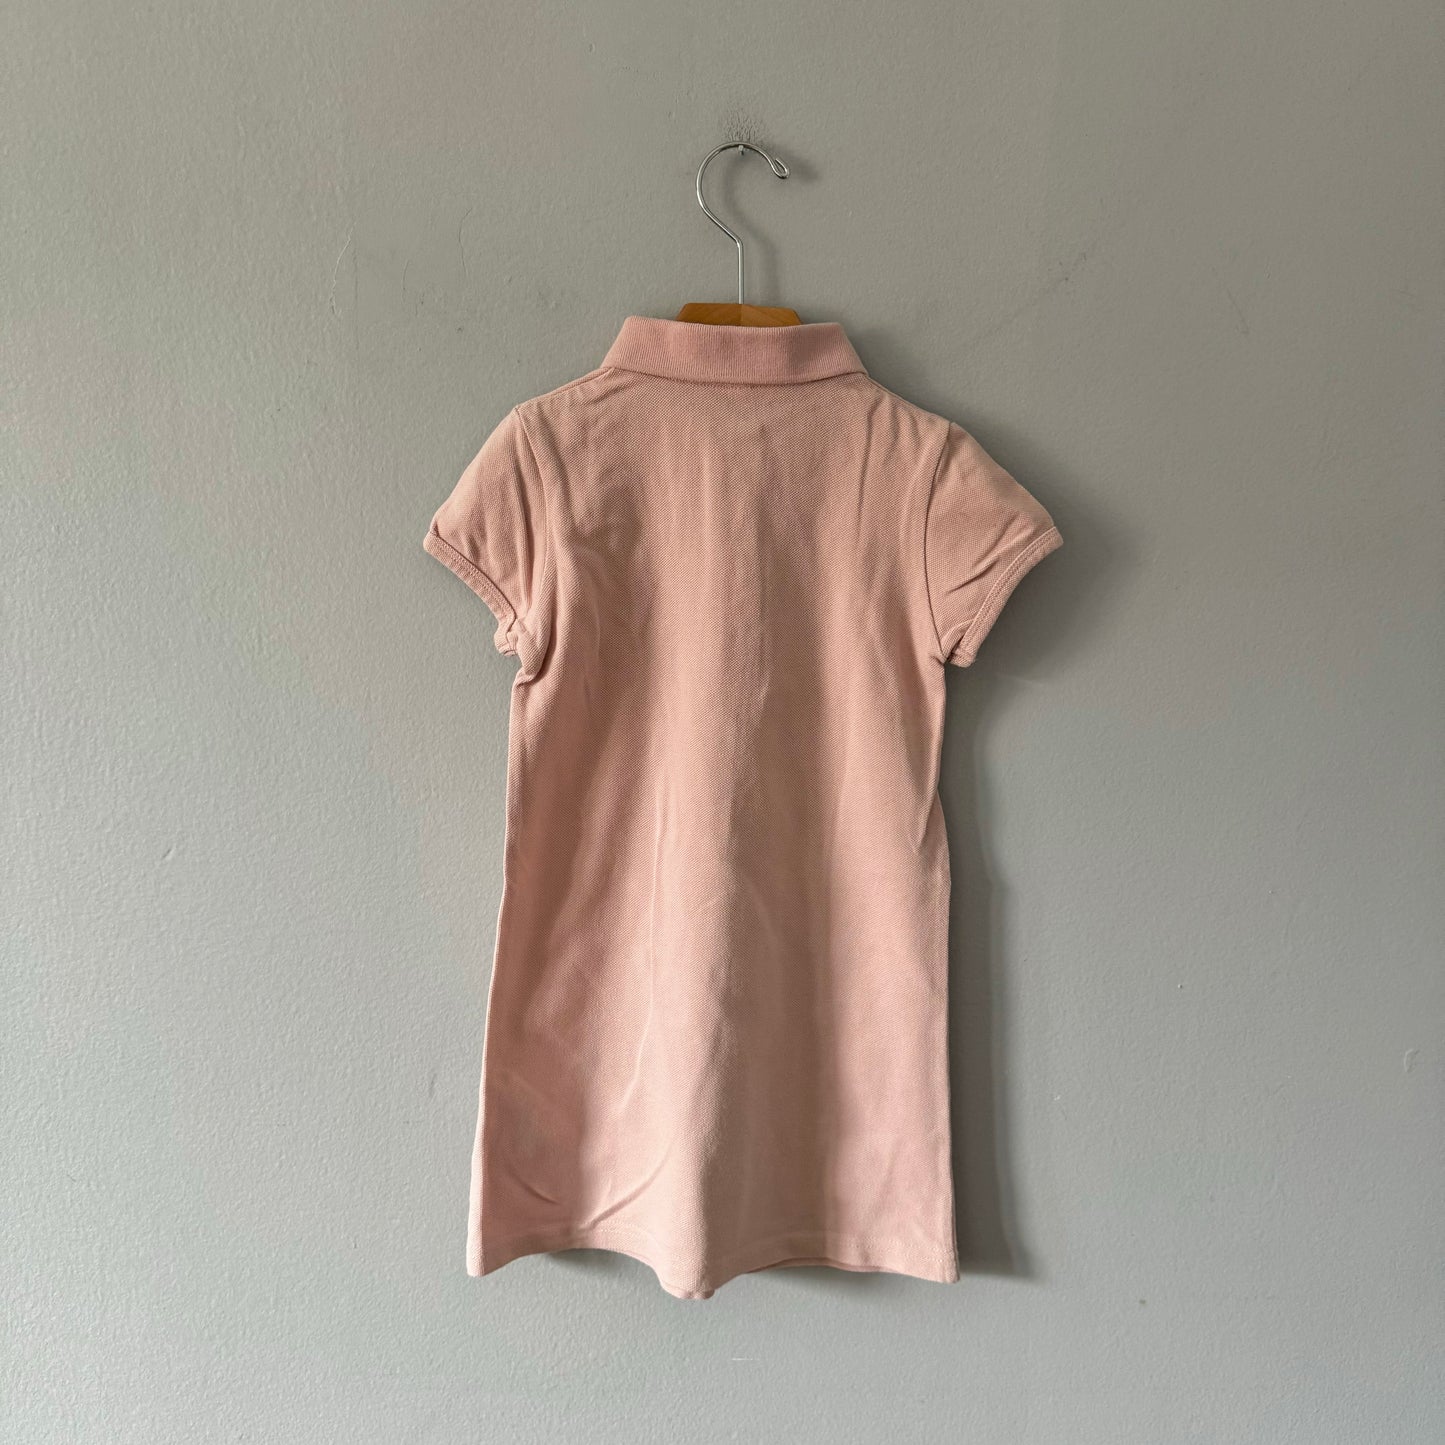 Muji / Pink polo dress / 110cm(4-5Y)